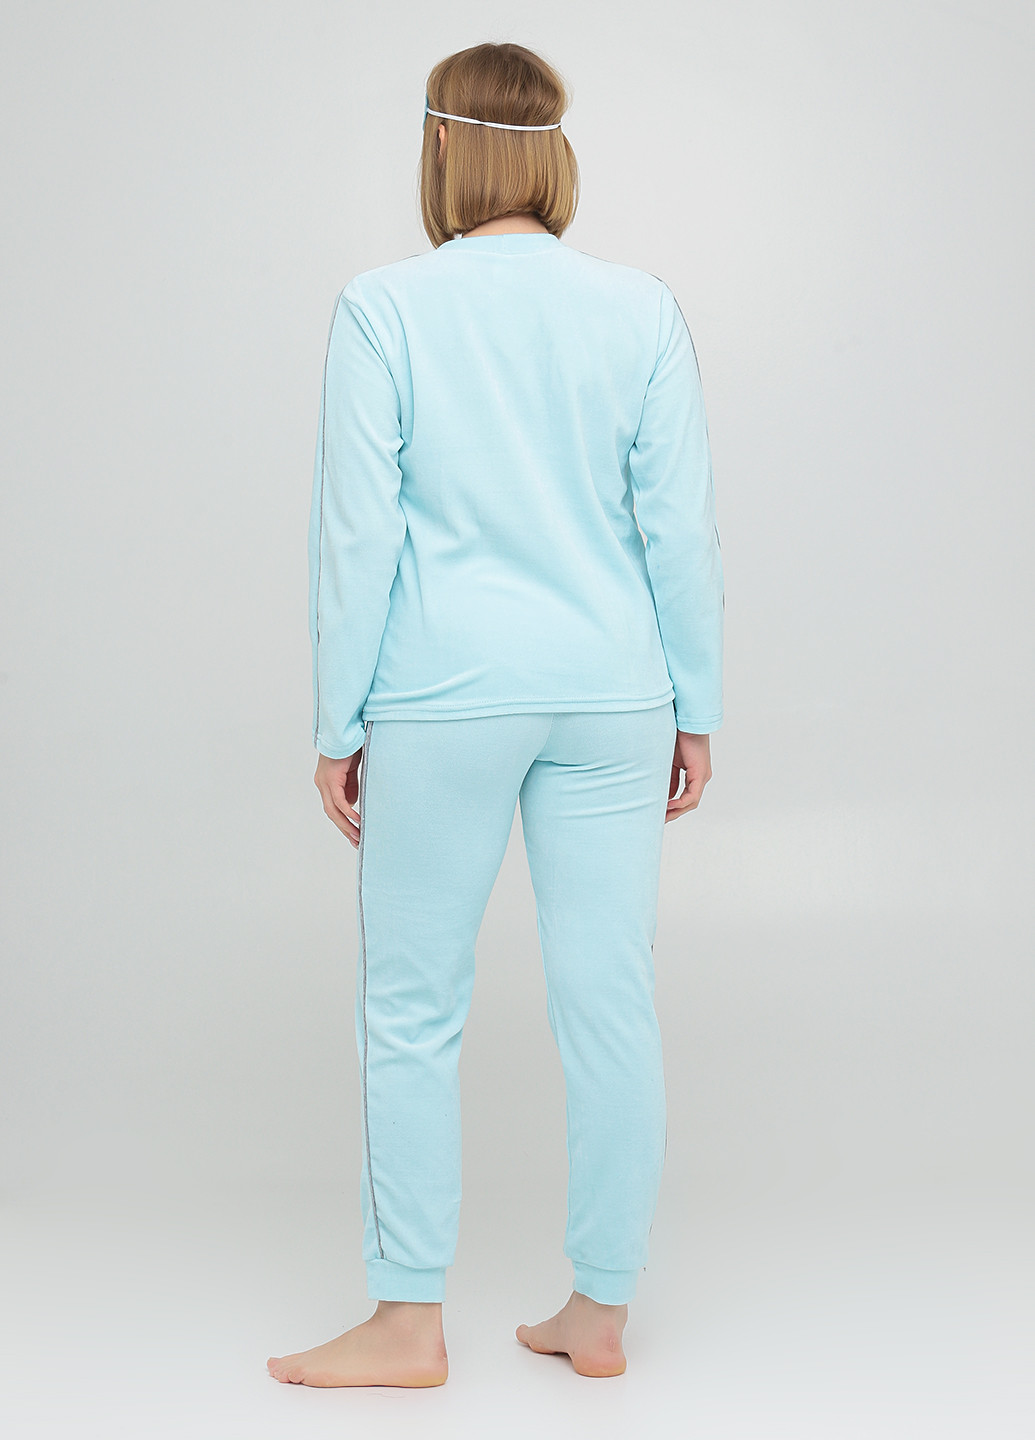 Светло-голубая всесезон пижама (свитшот, брюки) свитшот + брюки Lucci